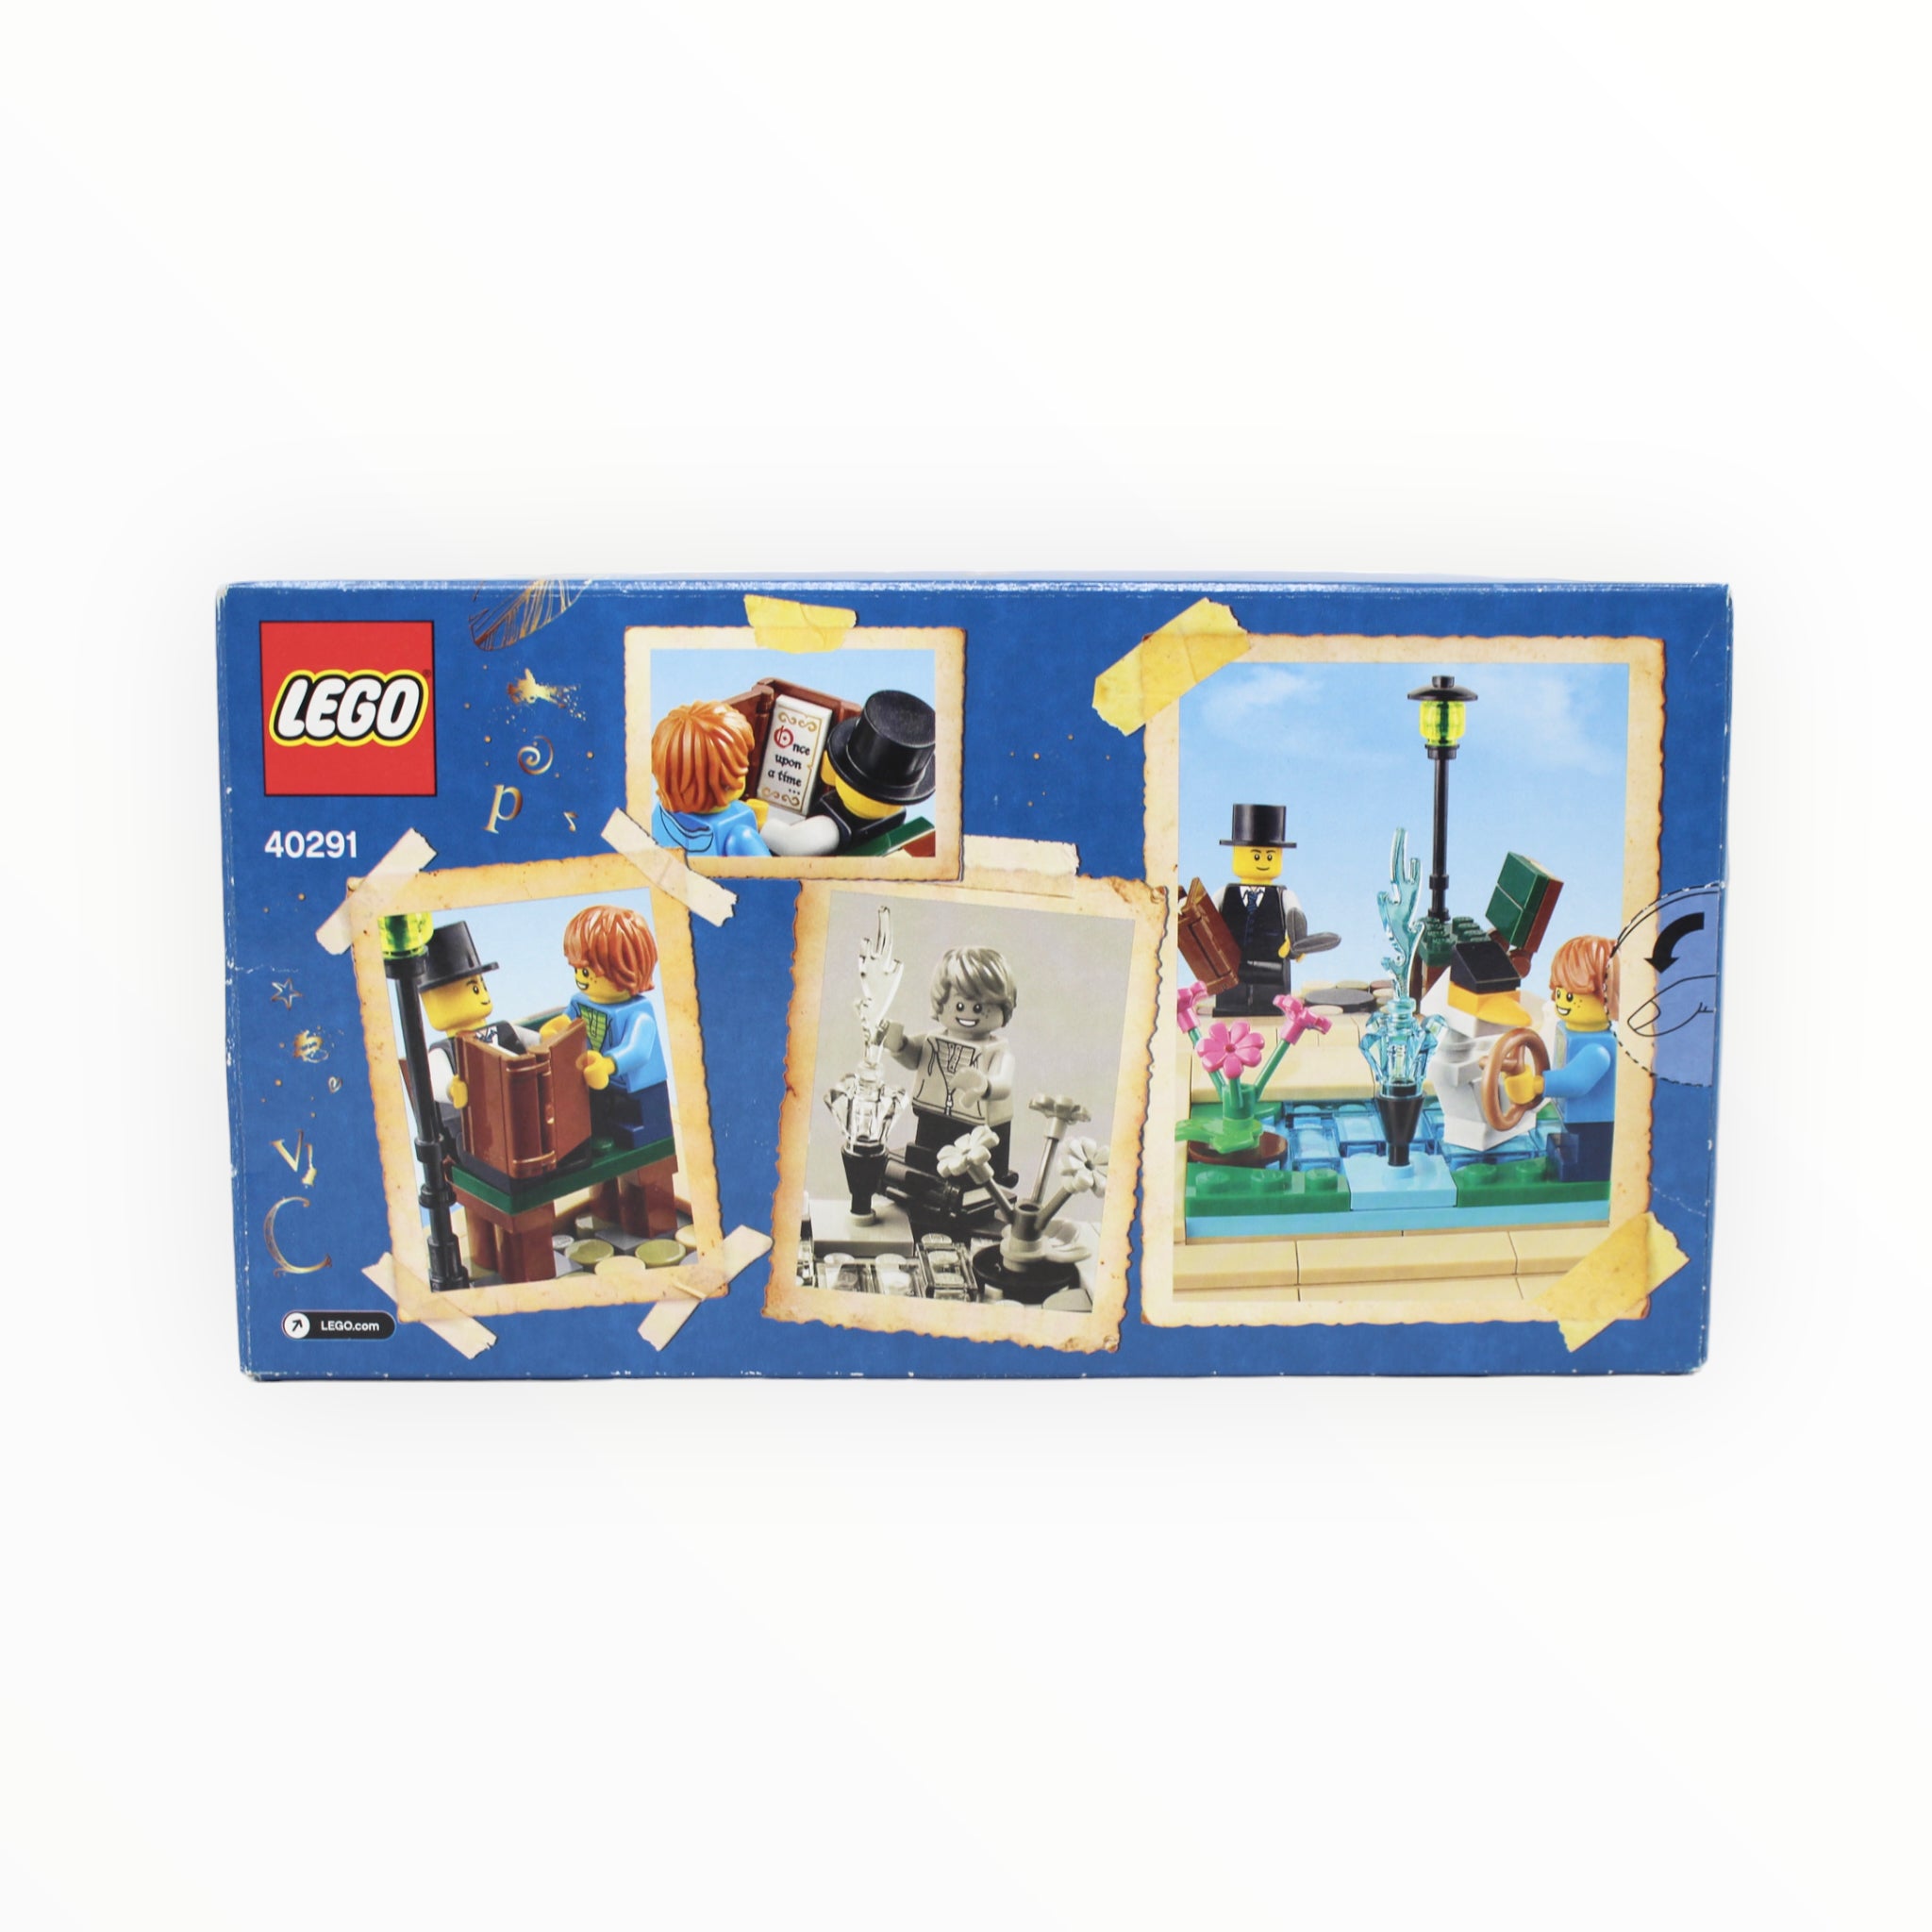 Retired Set 40291 LEGO Creative Personalities